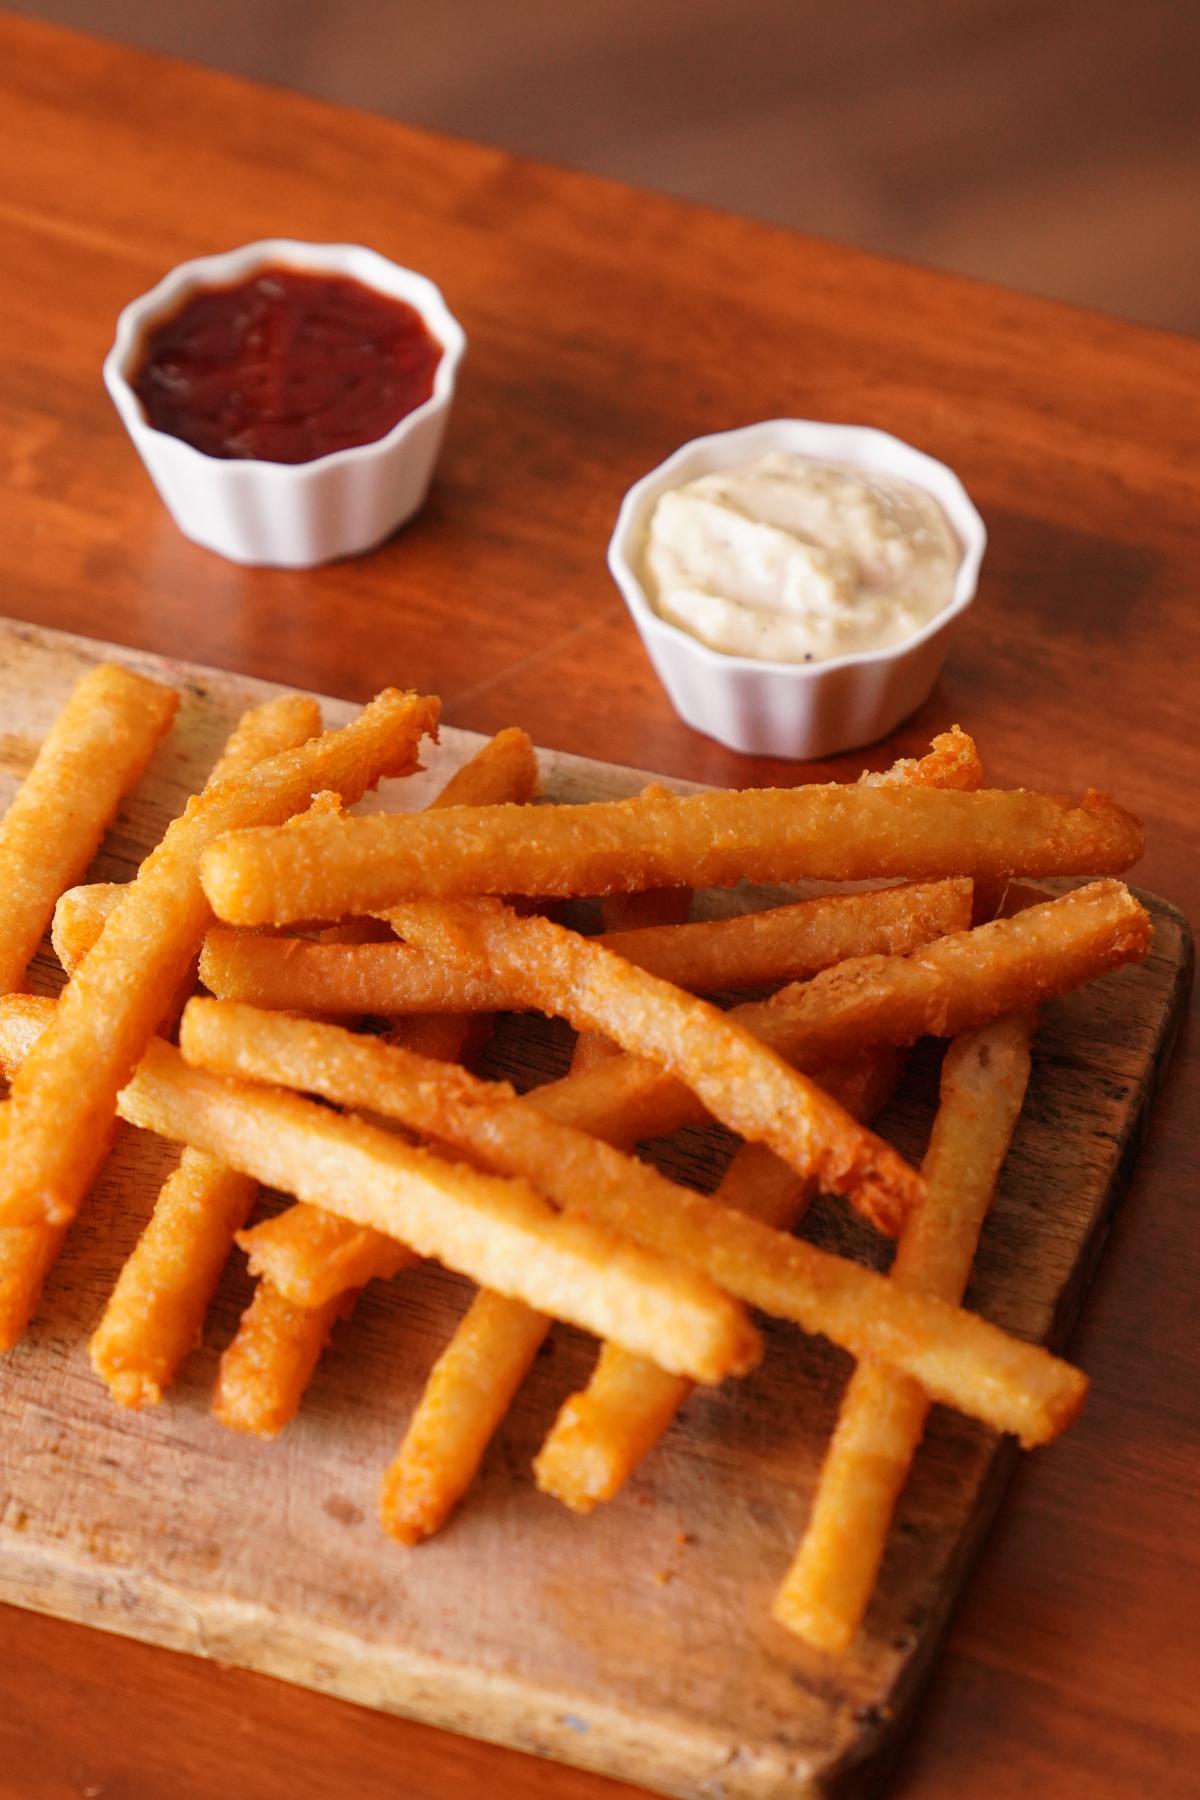 Long fries